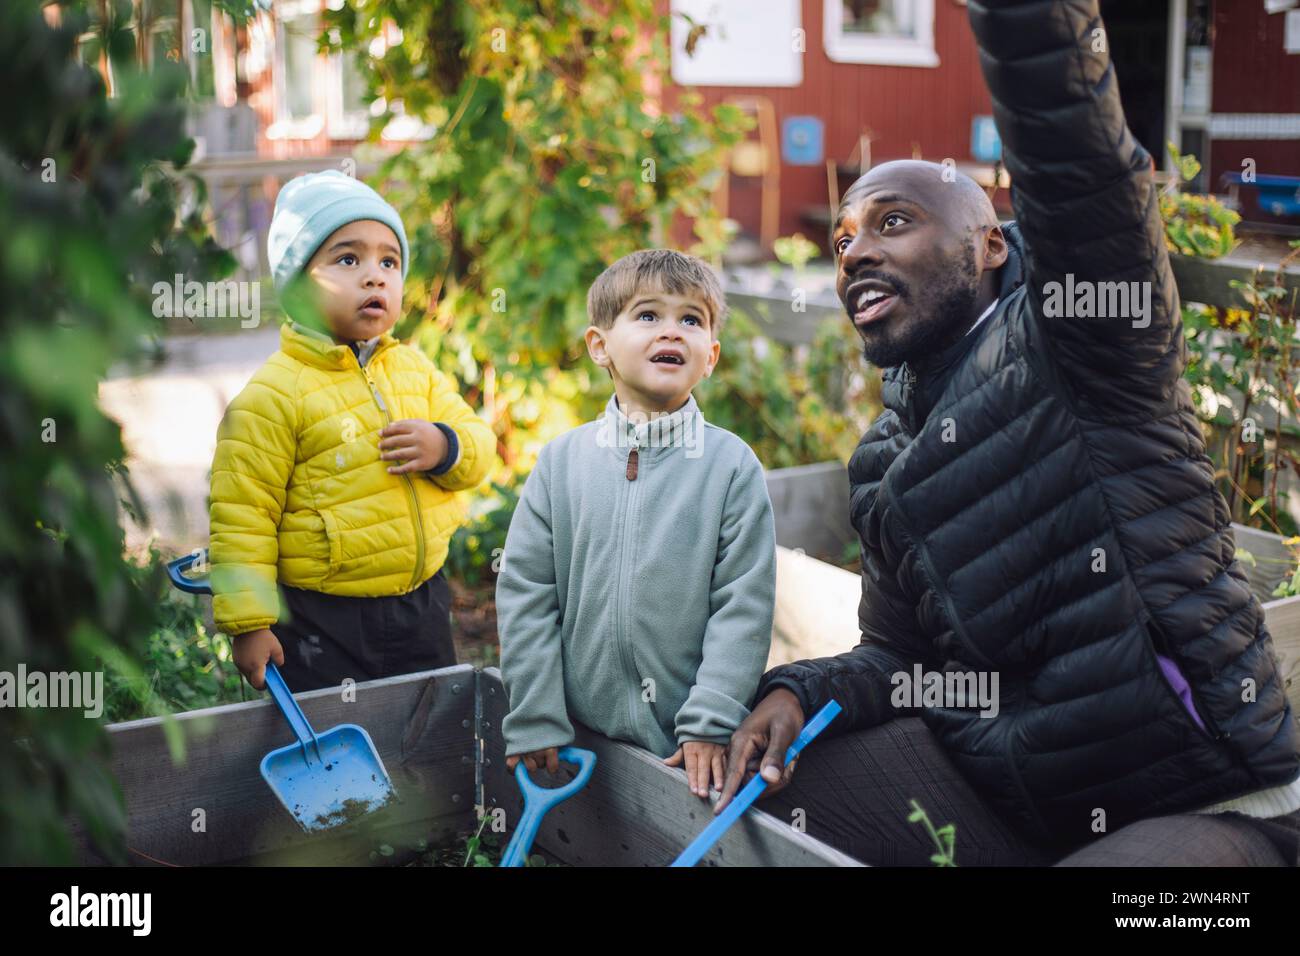 Male teacher talking with preschool kids holding shovel at garden Stock Photo